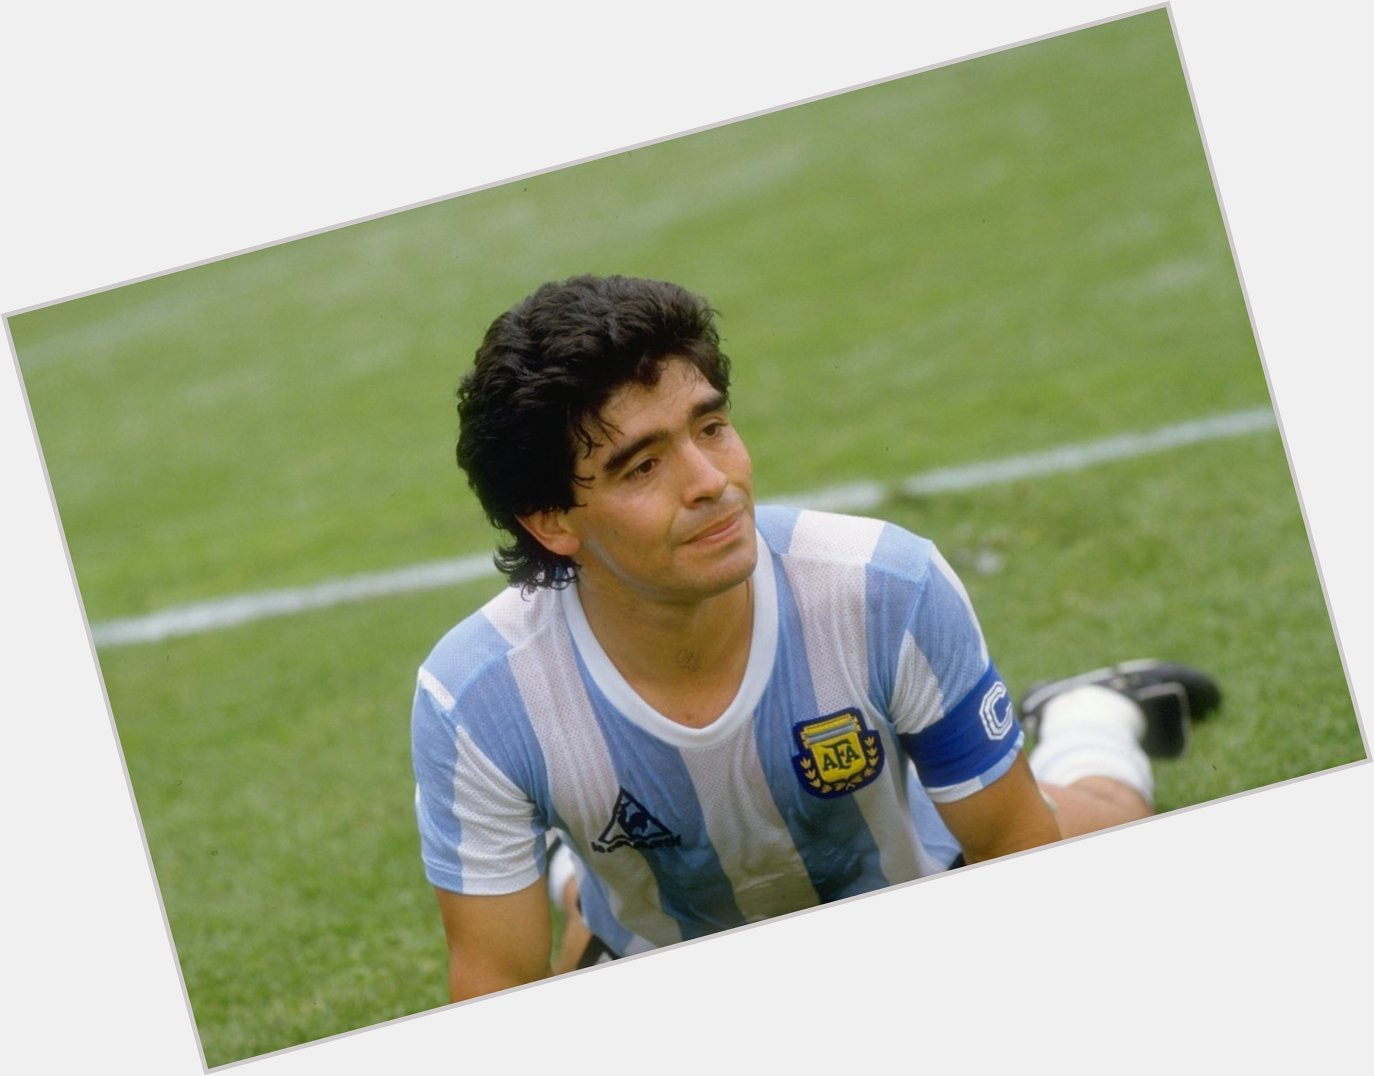 Happy Birthday Diego Maradona. And Happy birthday to you reader if it\s your birthday as well! 